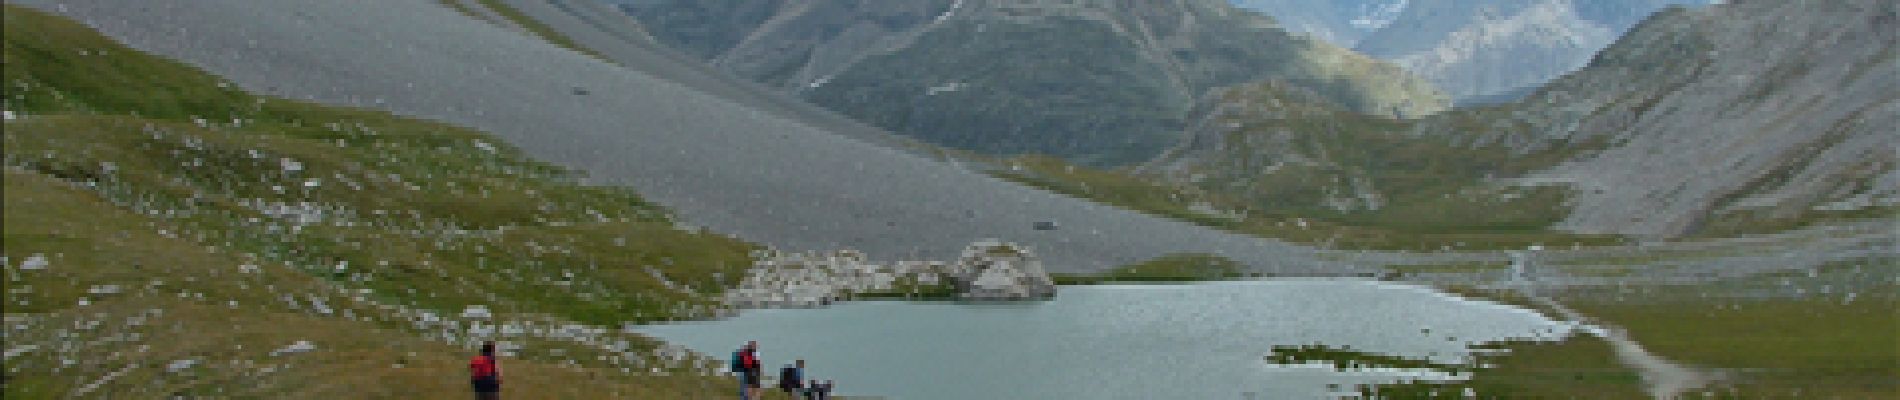 POI Val-Cenis - Le lac rond - Photo